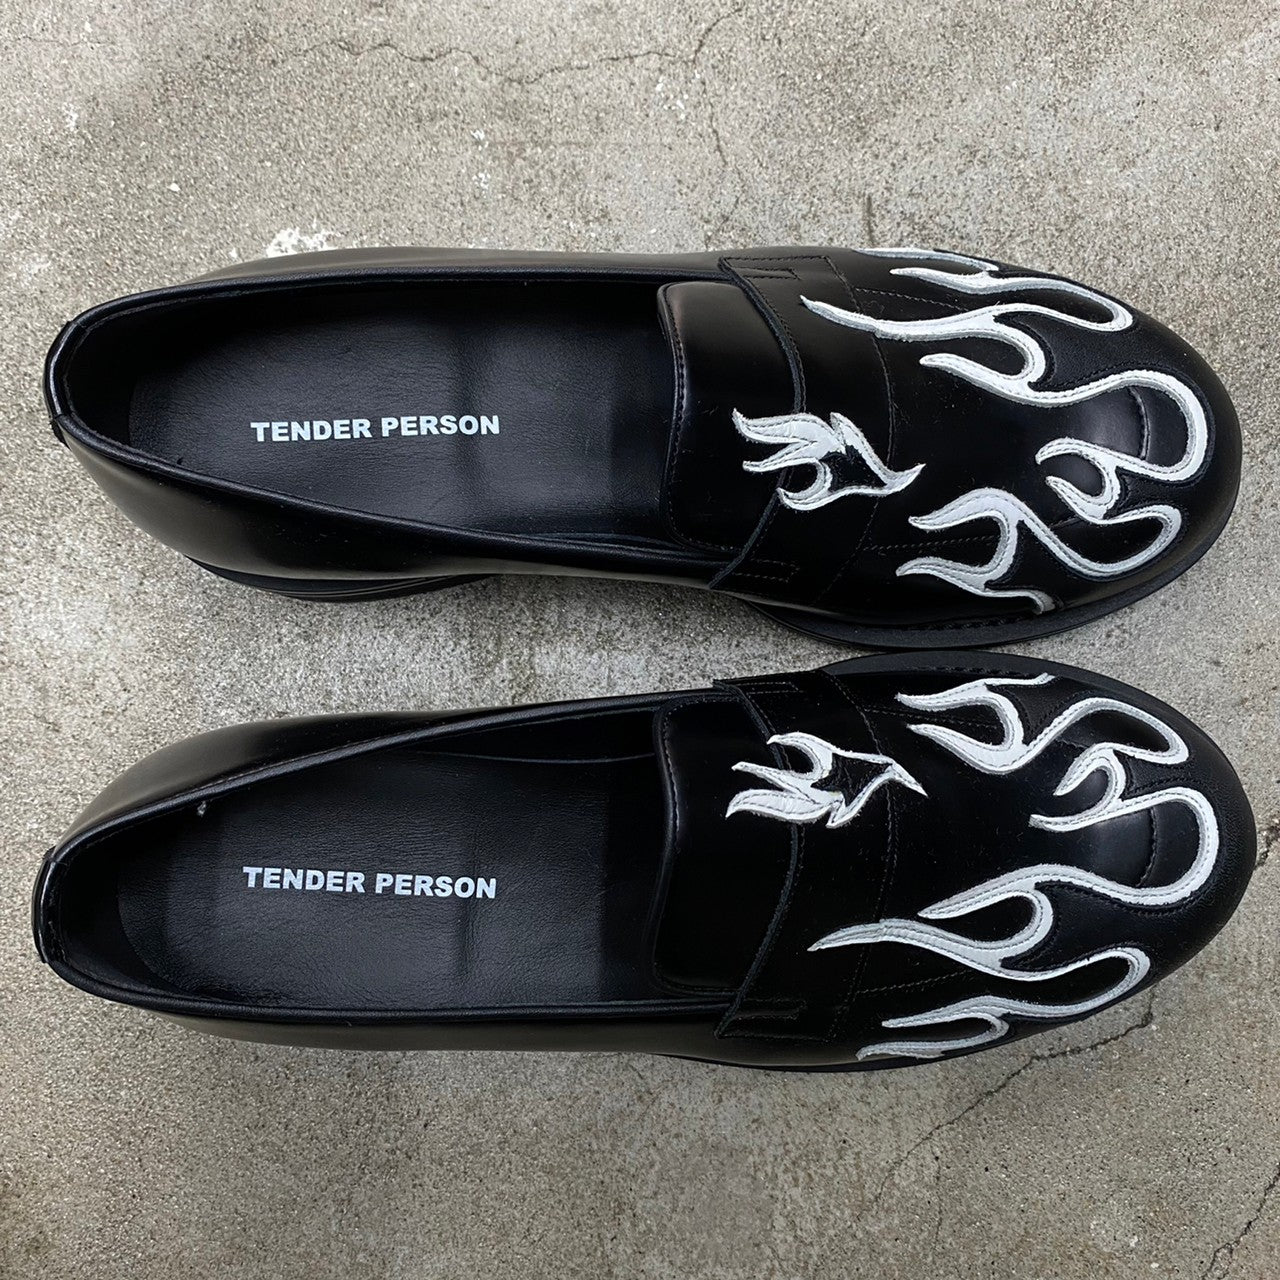 TENDERPERSON テンダーパーソン ローファー tenderperson - 靴